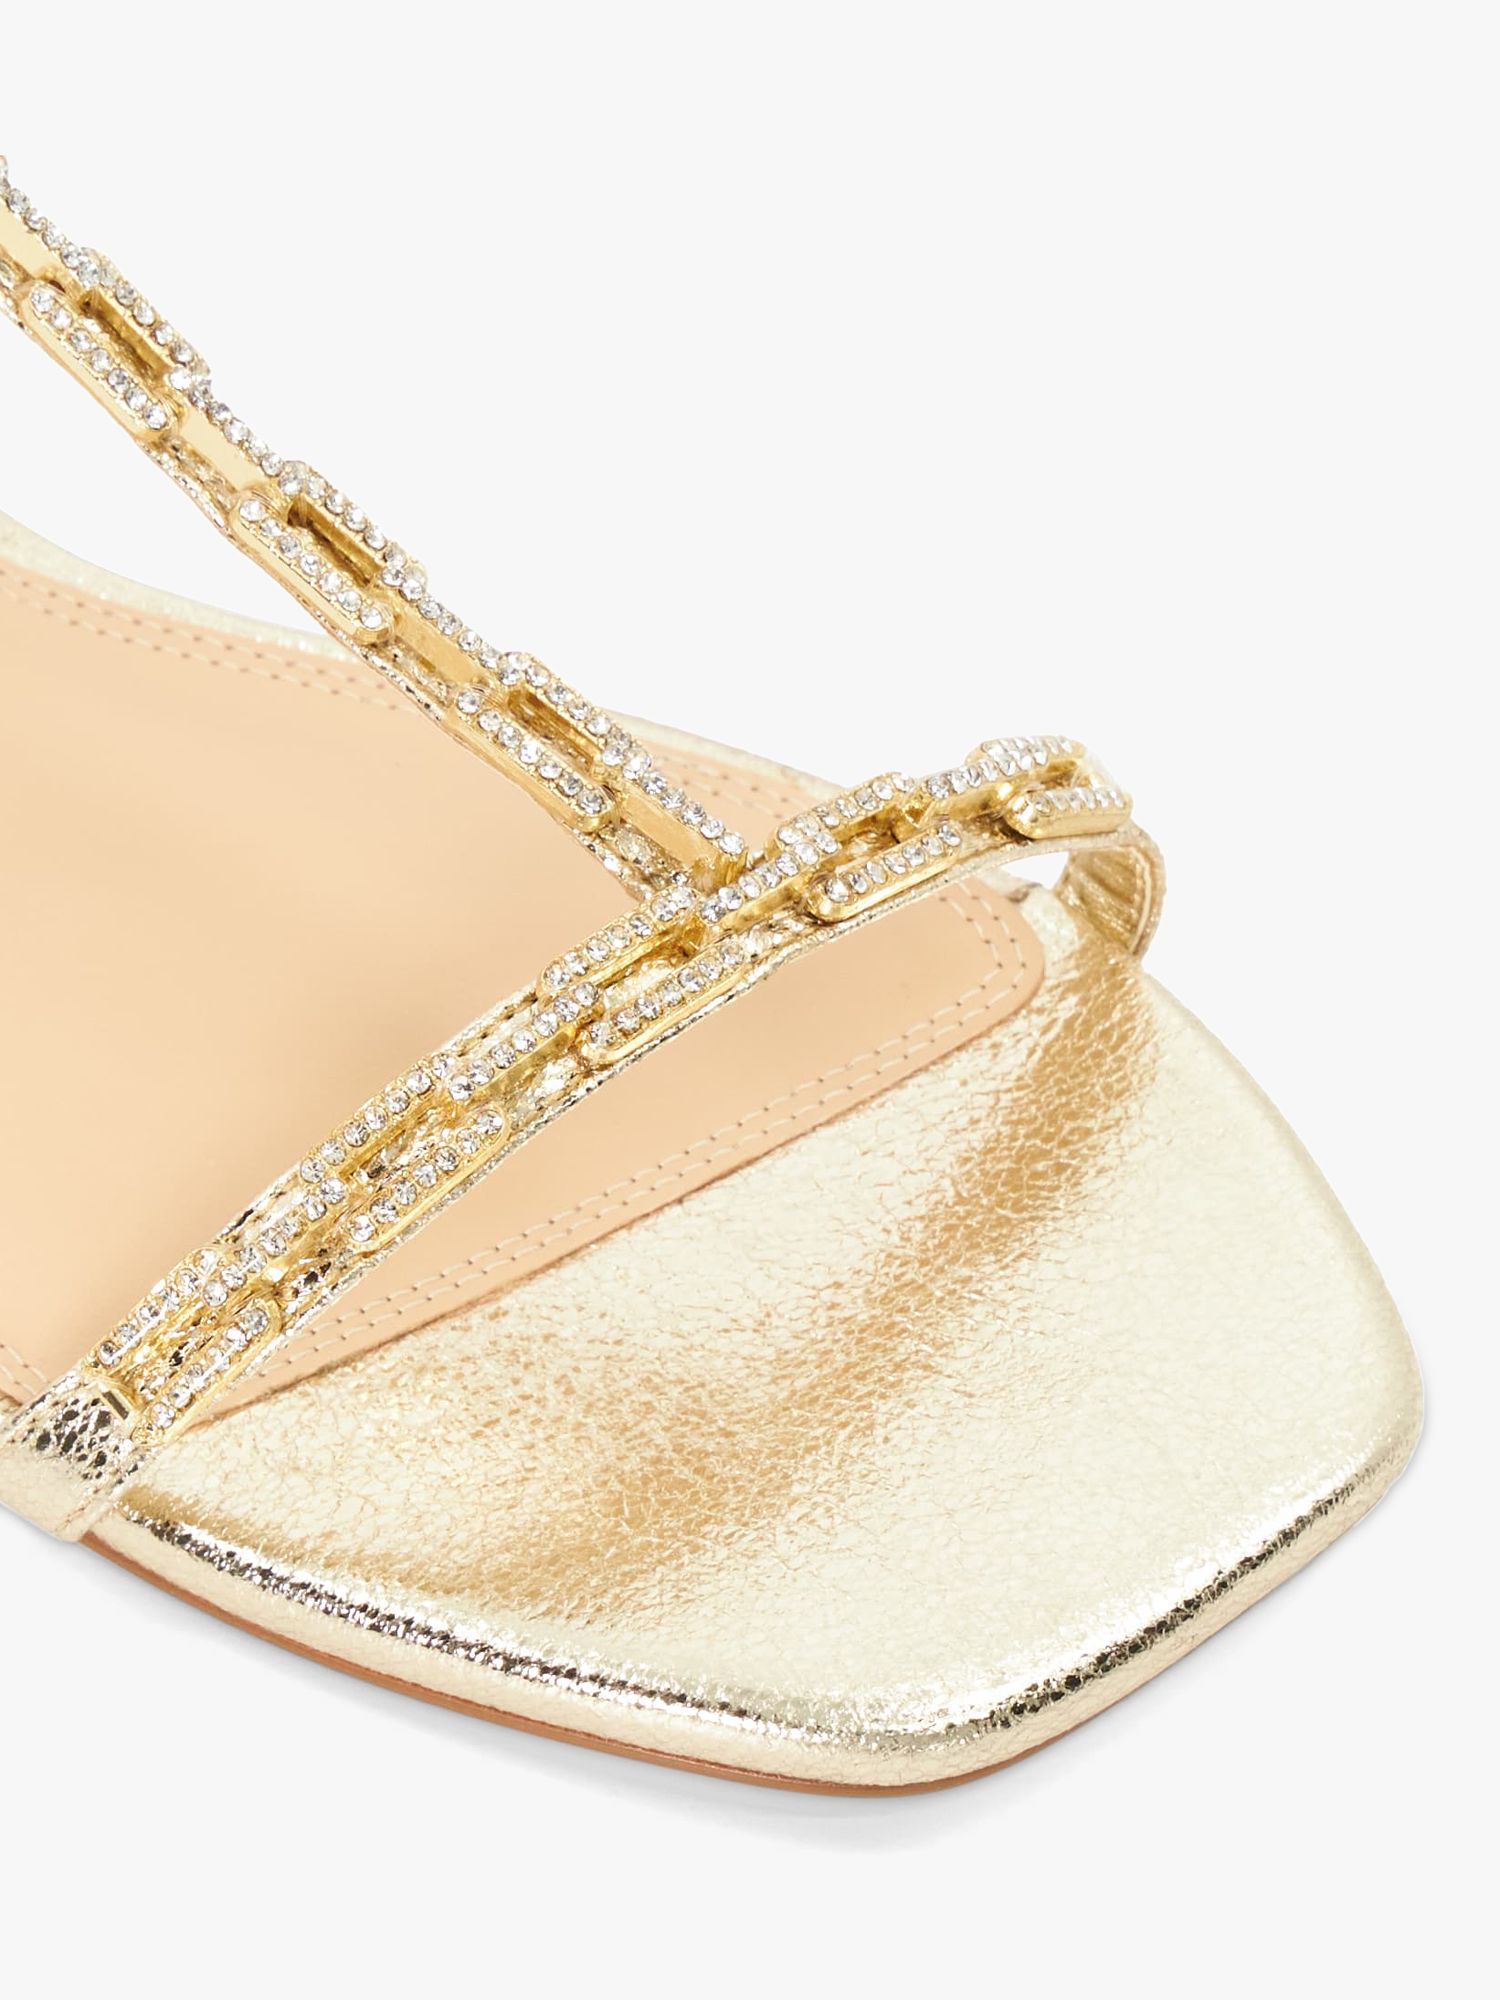 Dune Nourish Fabric Flat Sandals, Gold, 3